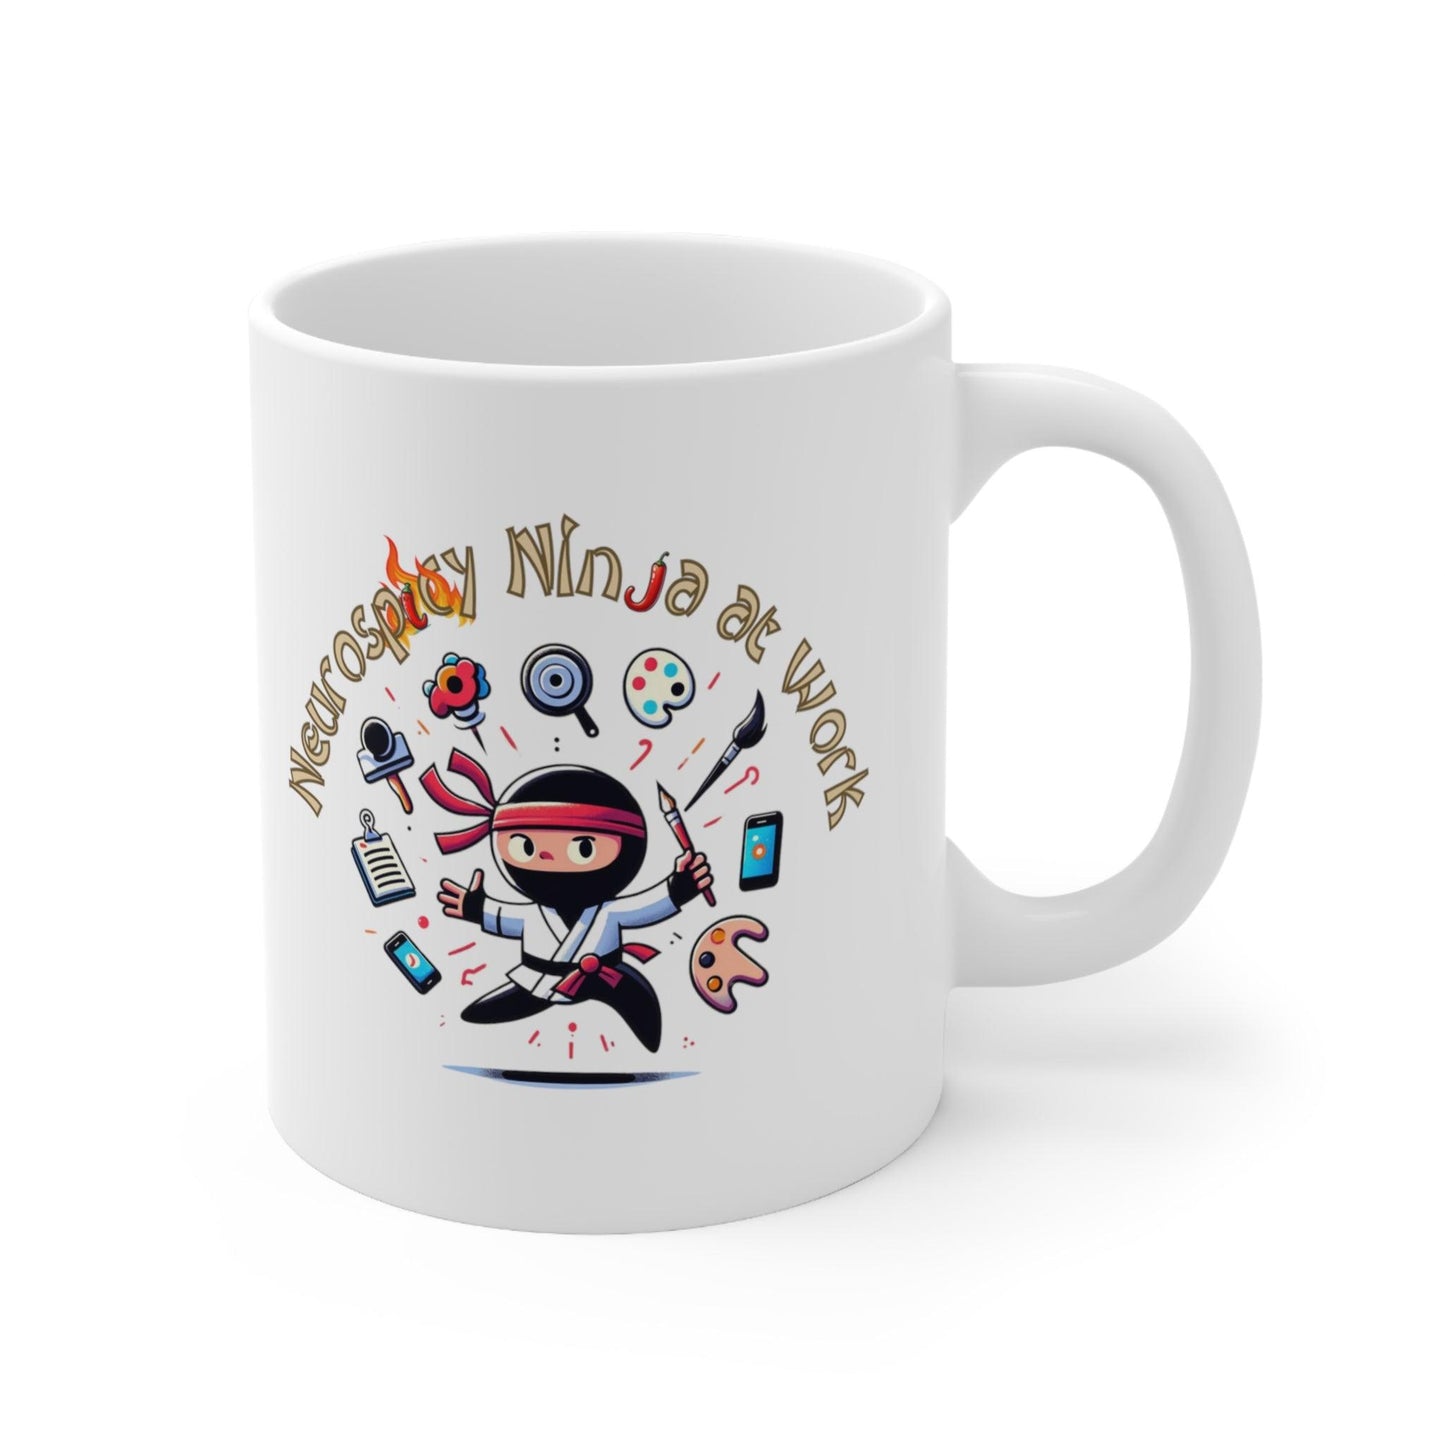 Neurospicy Ninja at Work - Fiery Neurodiversity Celebration Mug - Fidget and Focus